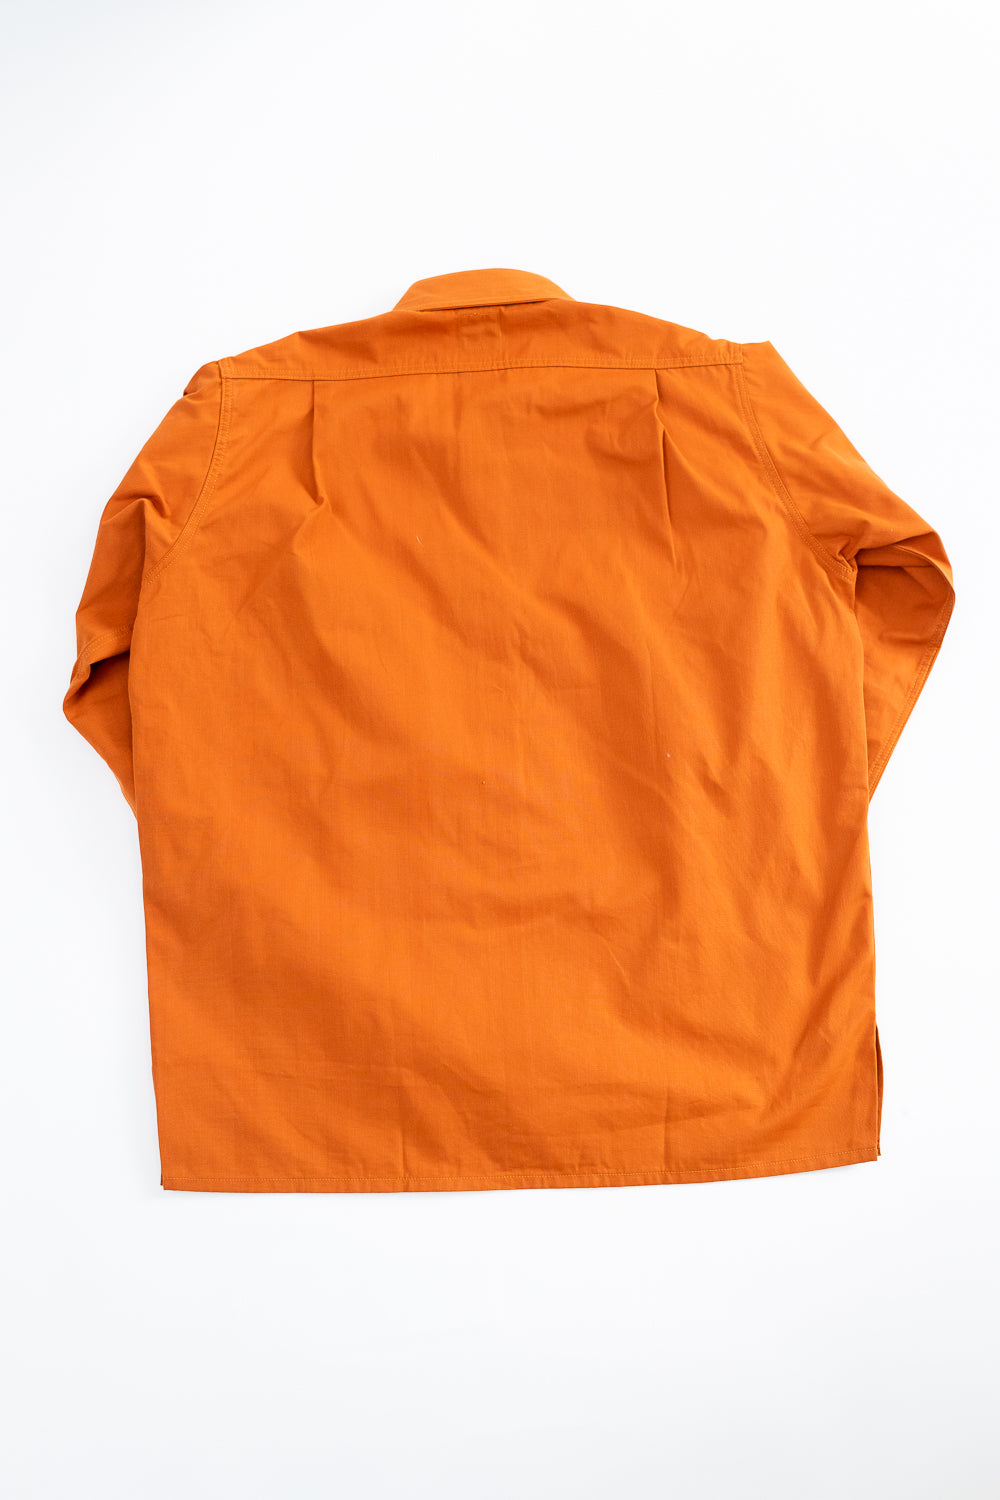 Lot JG-15 - Ski Patrol Shirt-Jac Full Open - Safety Orange